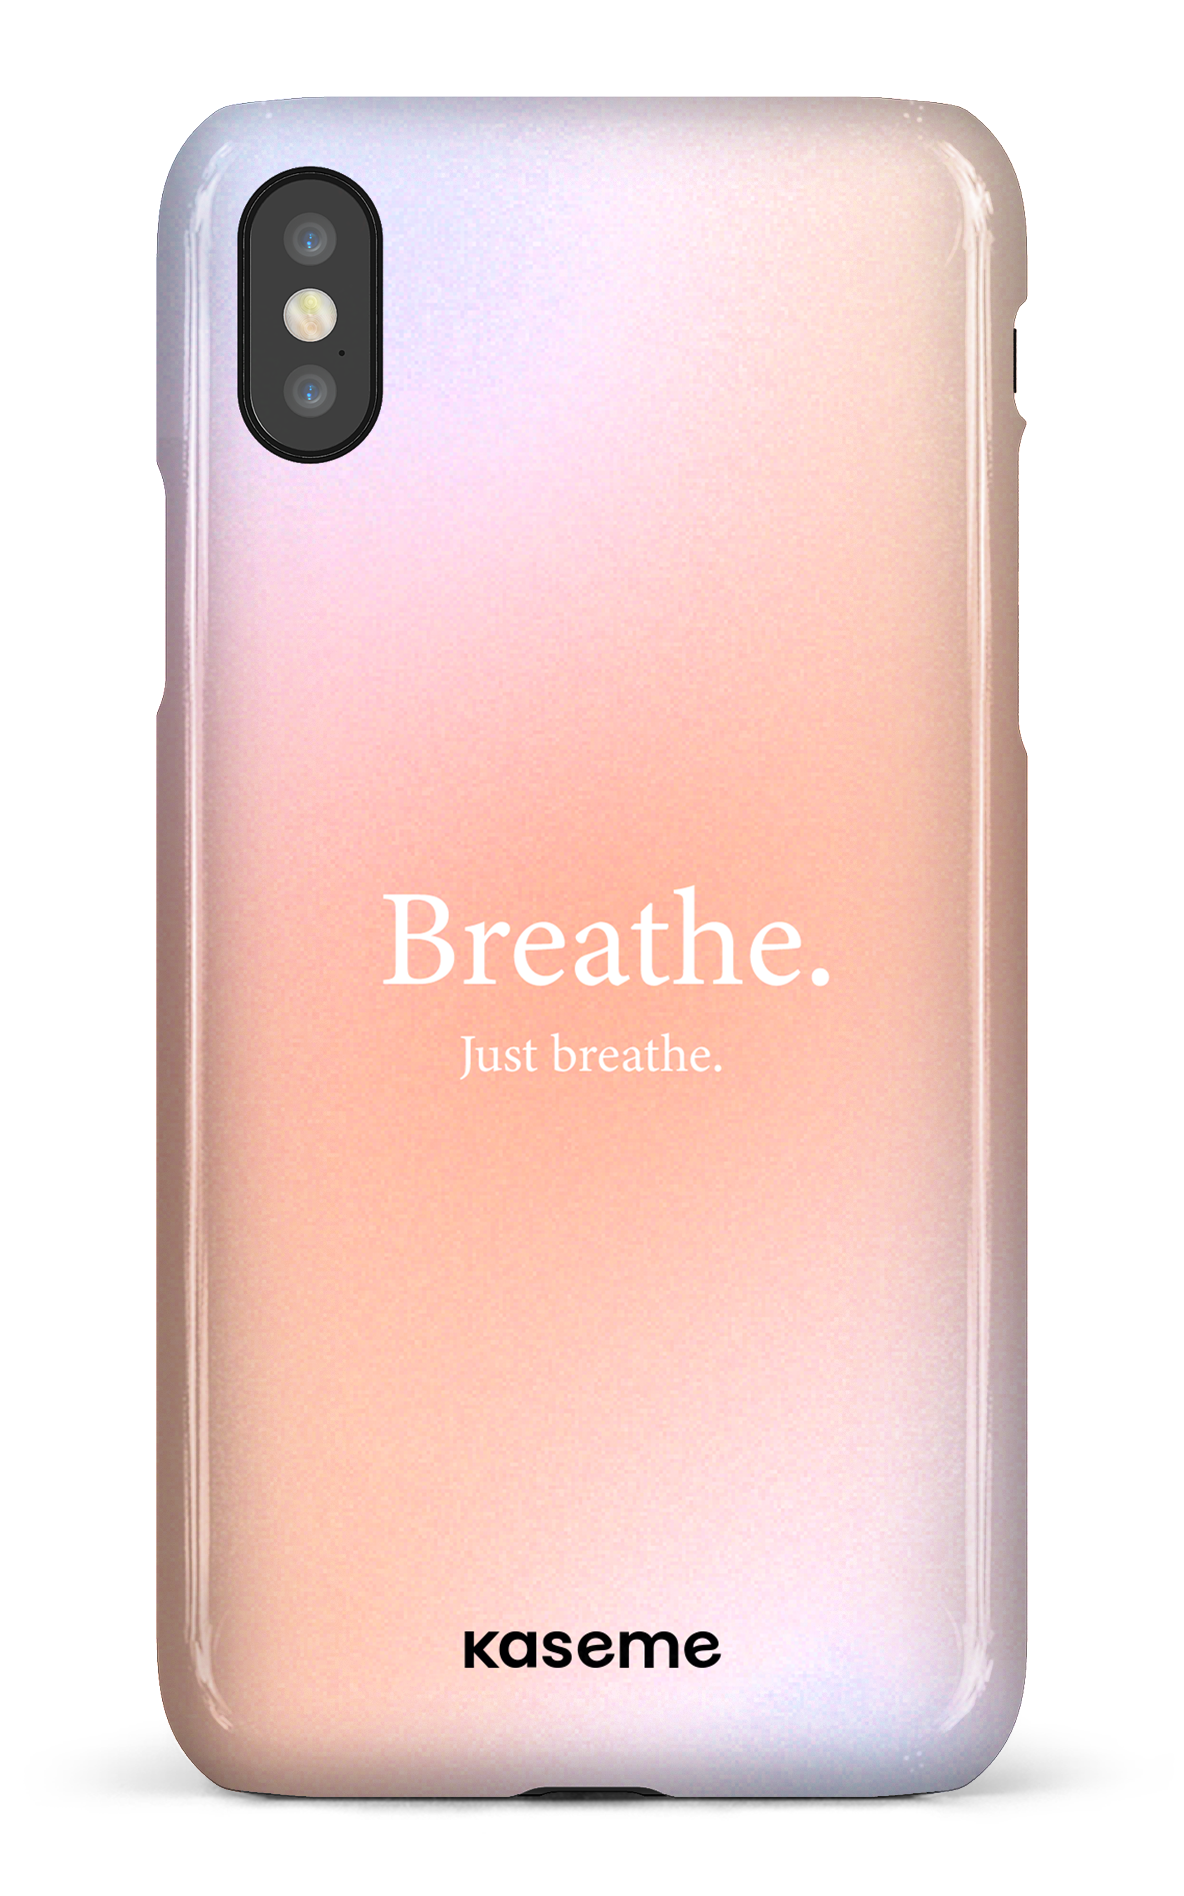 Just breathe - iPhone X/Xs